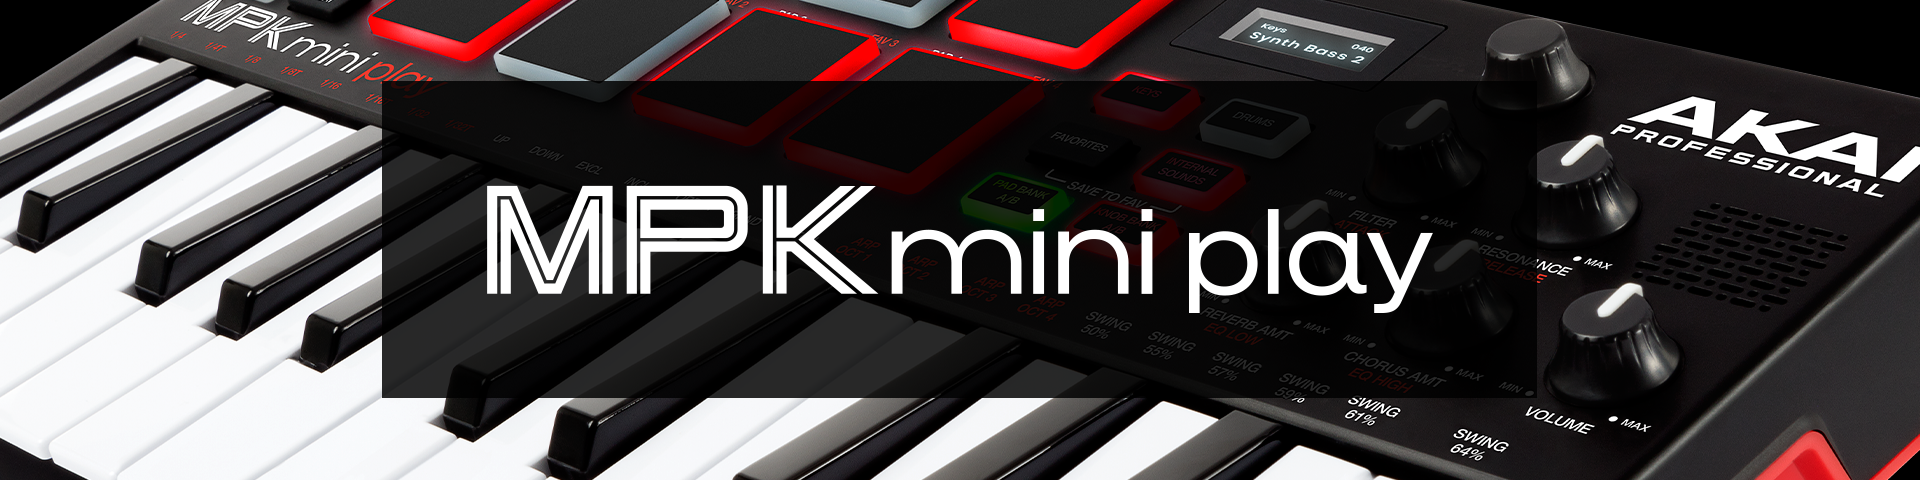 Keyboard with Built-in Speaker MPK Mini Play | Akai Pro